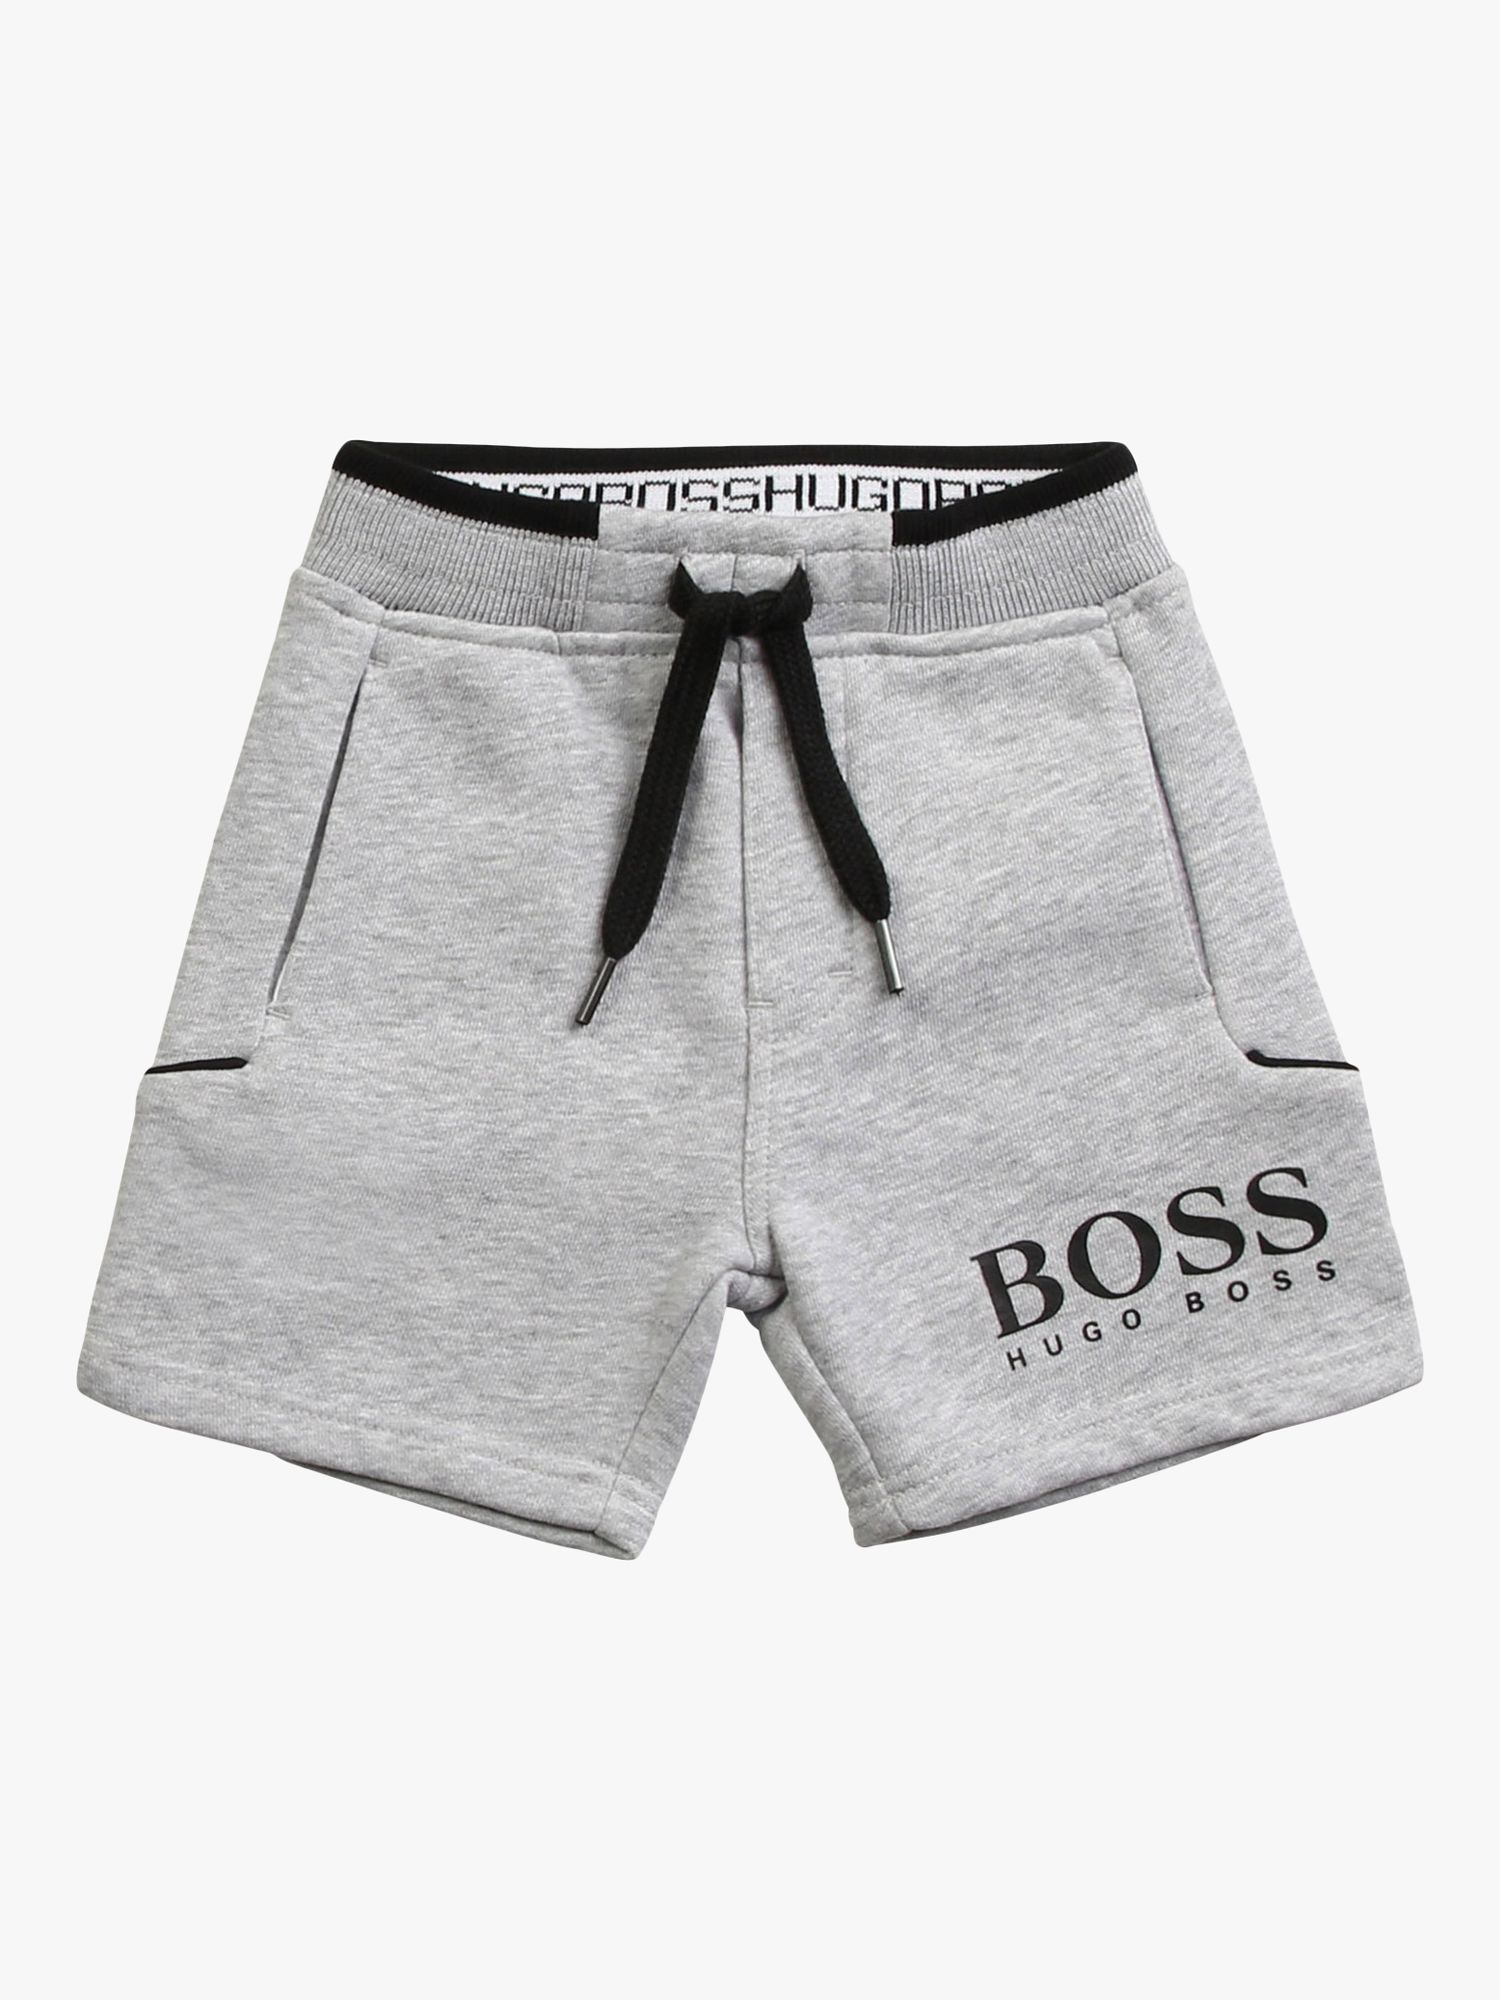 hugo boss bermuda shorts